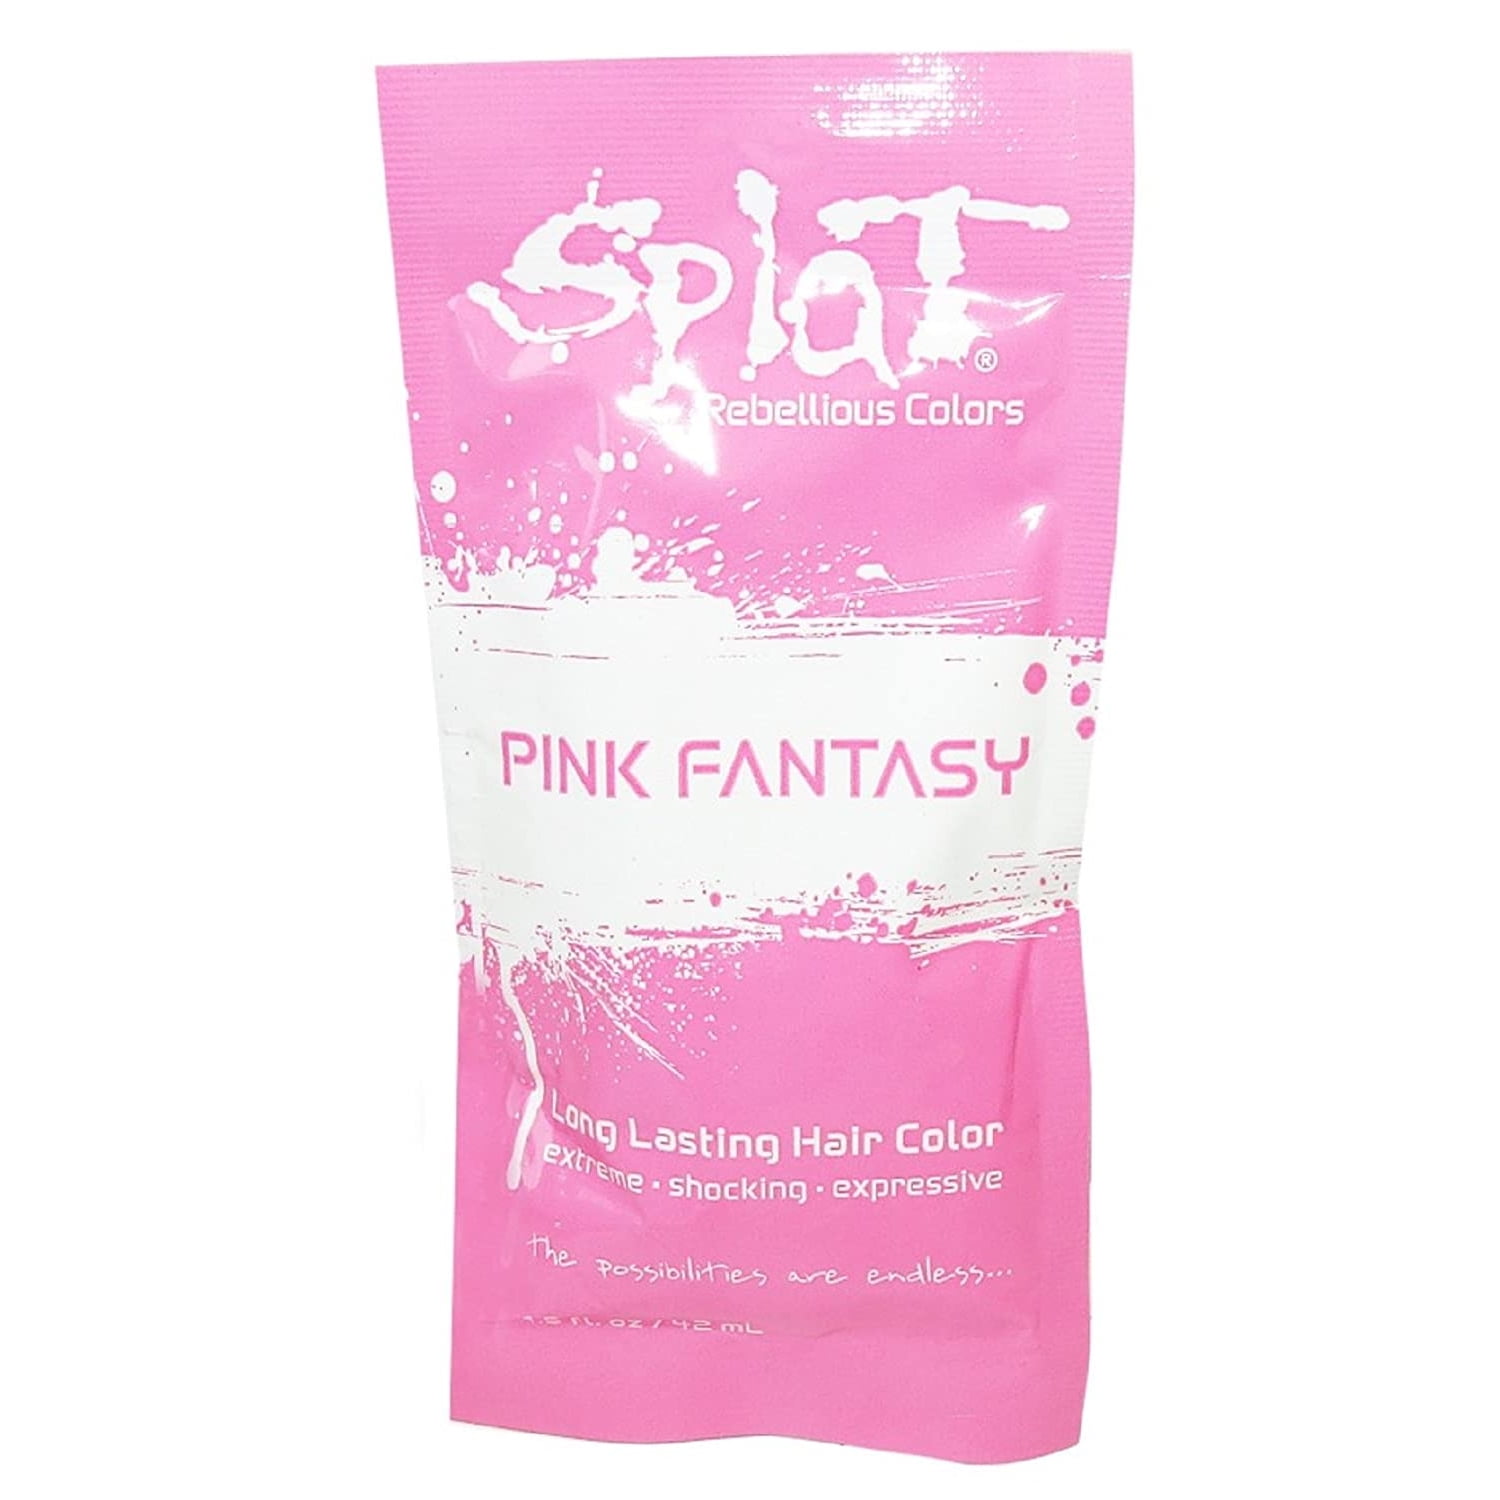 Splat Singles Hair Color Dye Foil Pack, Pink Fantasy, 1.5 Oz.